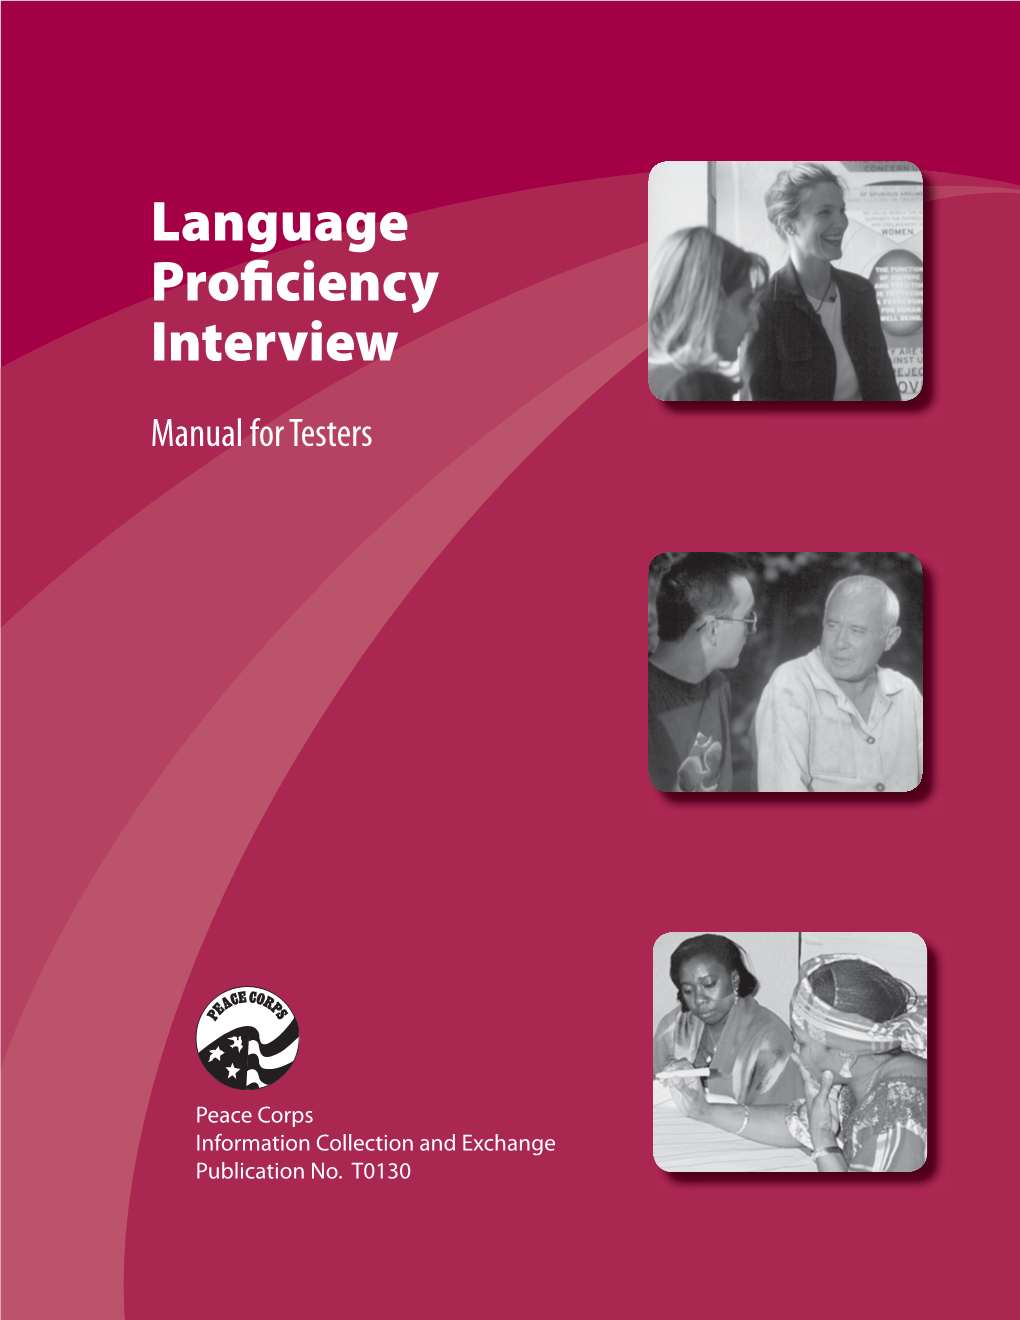 Language Proficiency Interview (LPI)